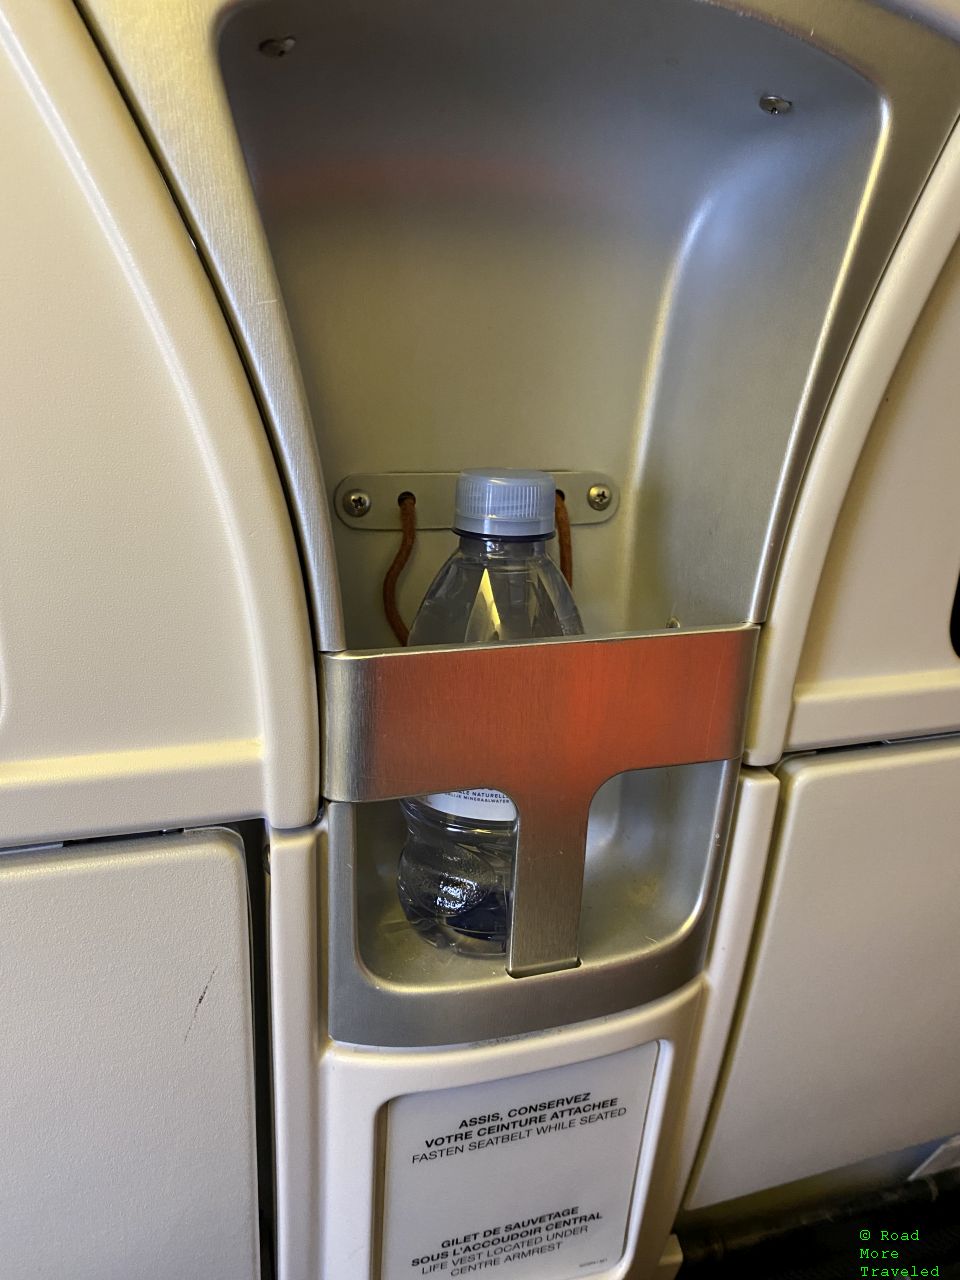 Air France Premium Economy seatback storage